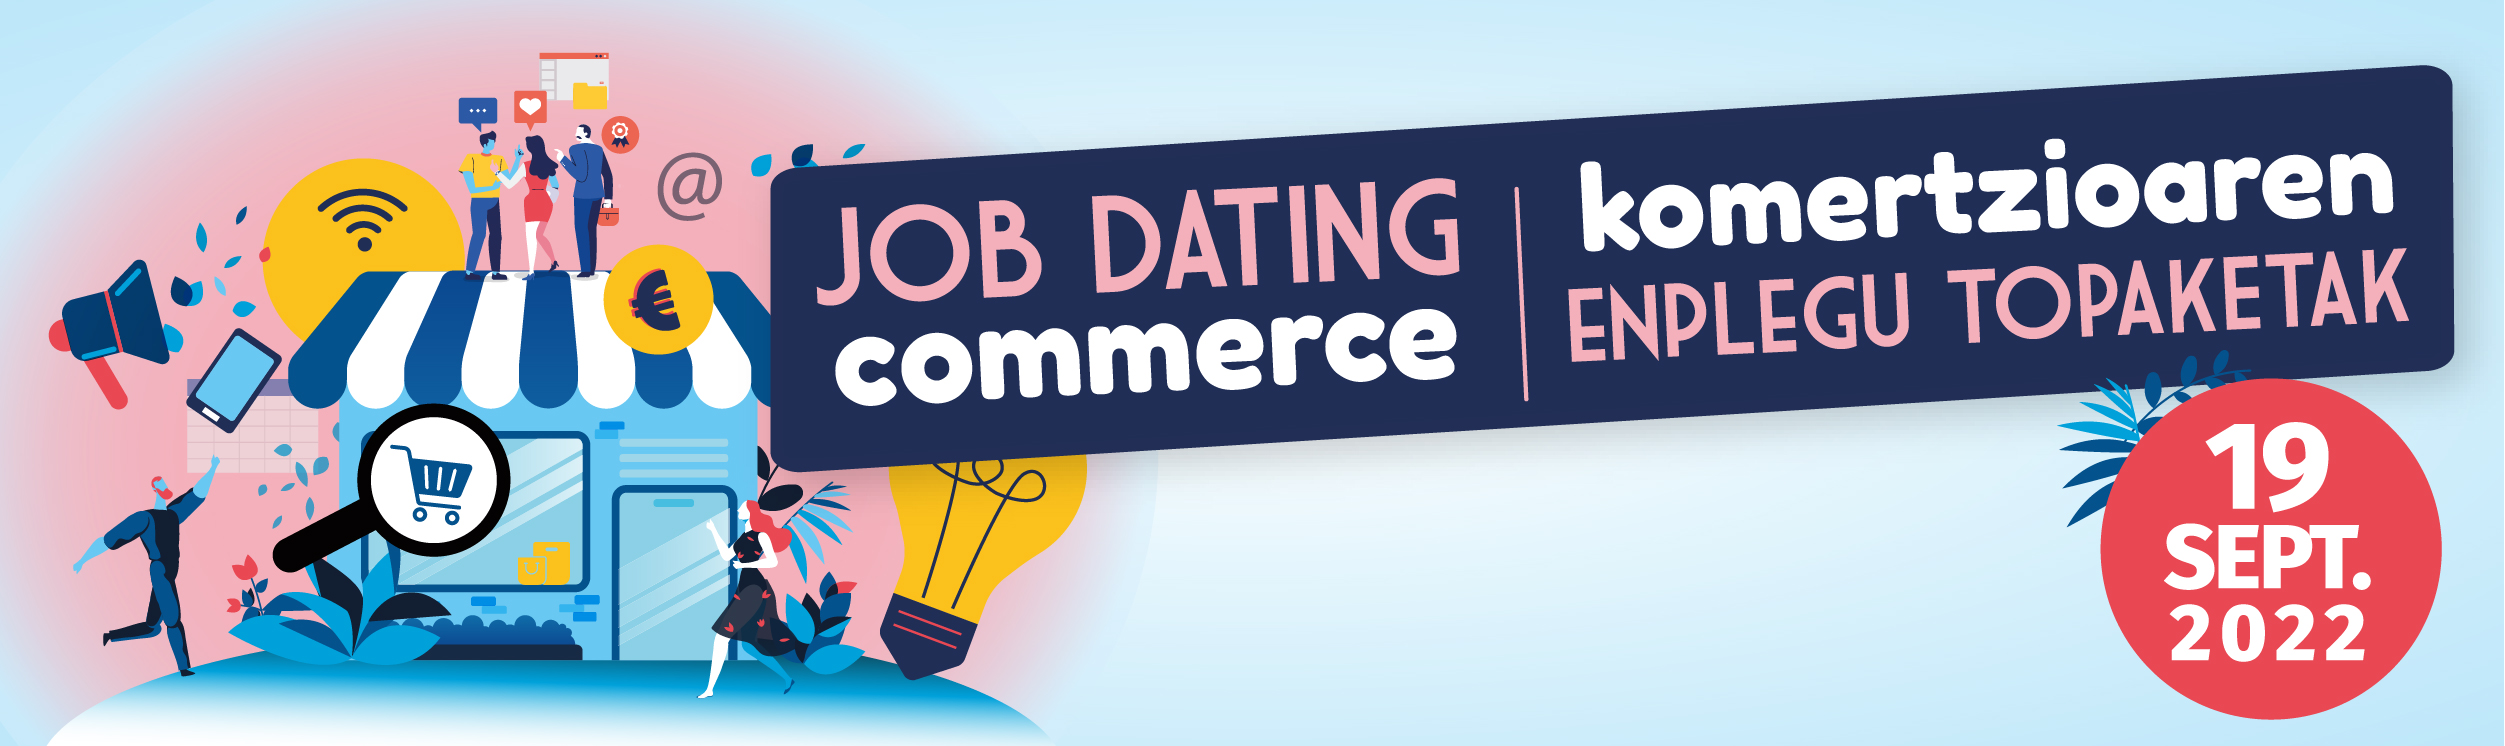 job dating commerce cci